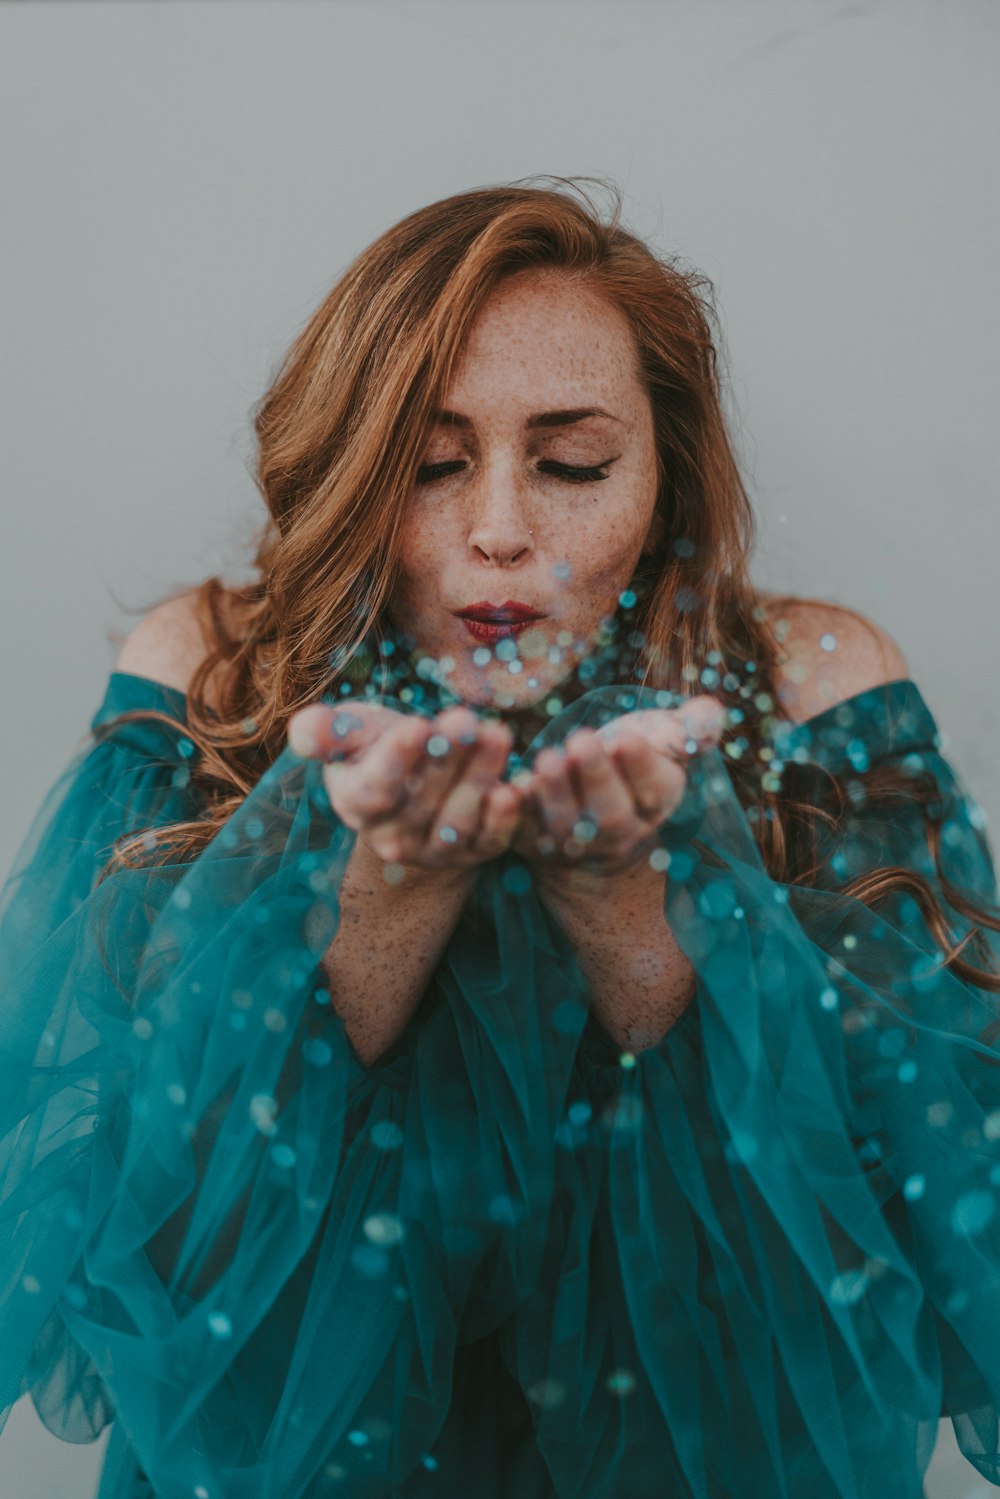 a woman in a blue dress blowing bubbles